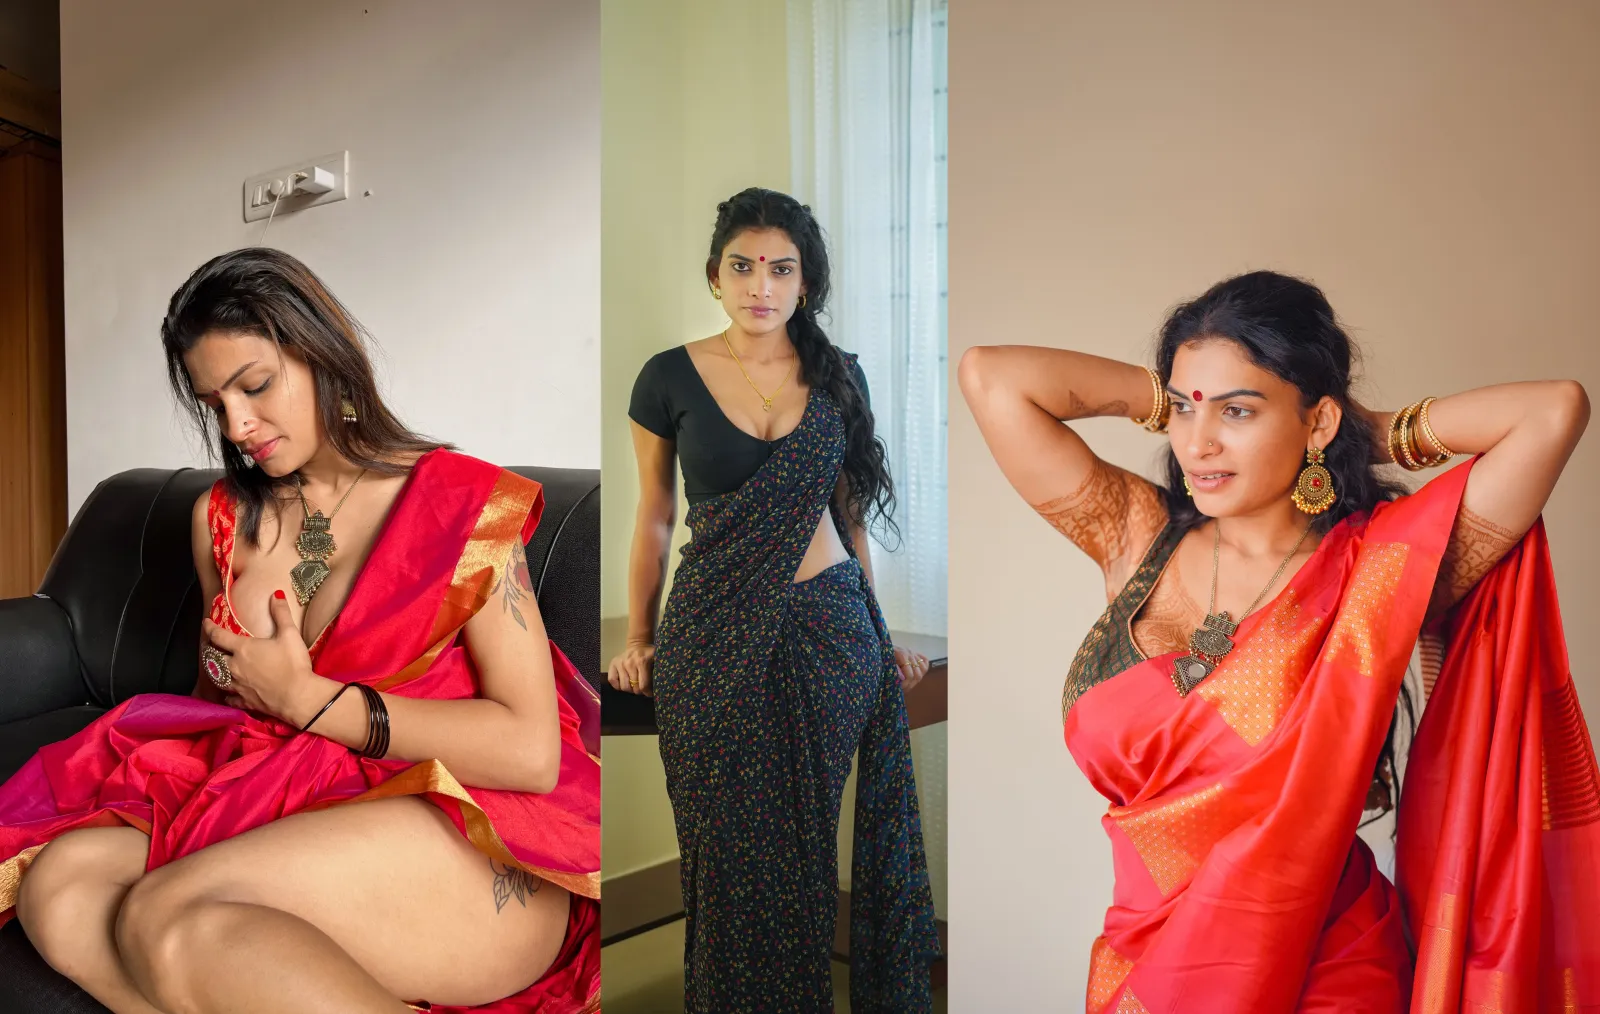 reshmi r nair posting nude on social media attracting premium fans - Gossibox.com